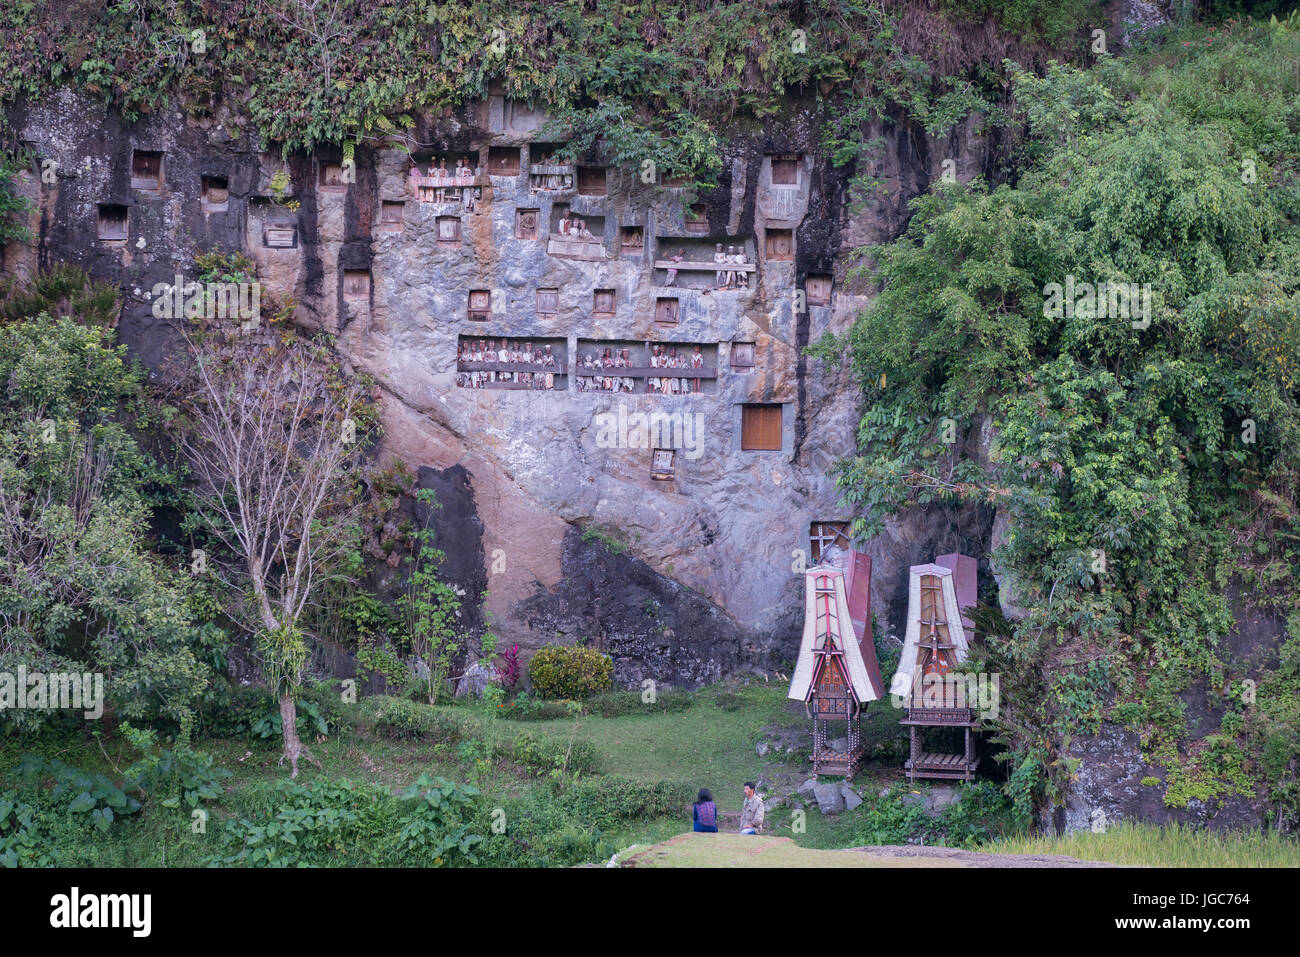 Cliff Torajan entierro efigie figuras (tau tau) Tana Toraja de Sulawesi, Indonesia Foto de stock